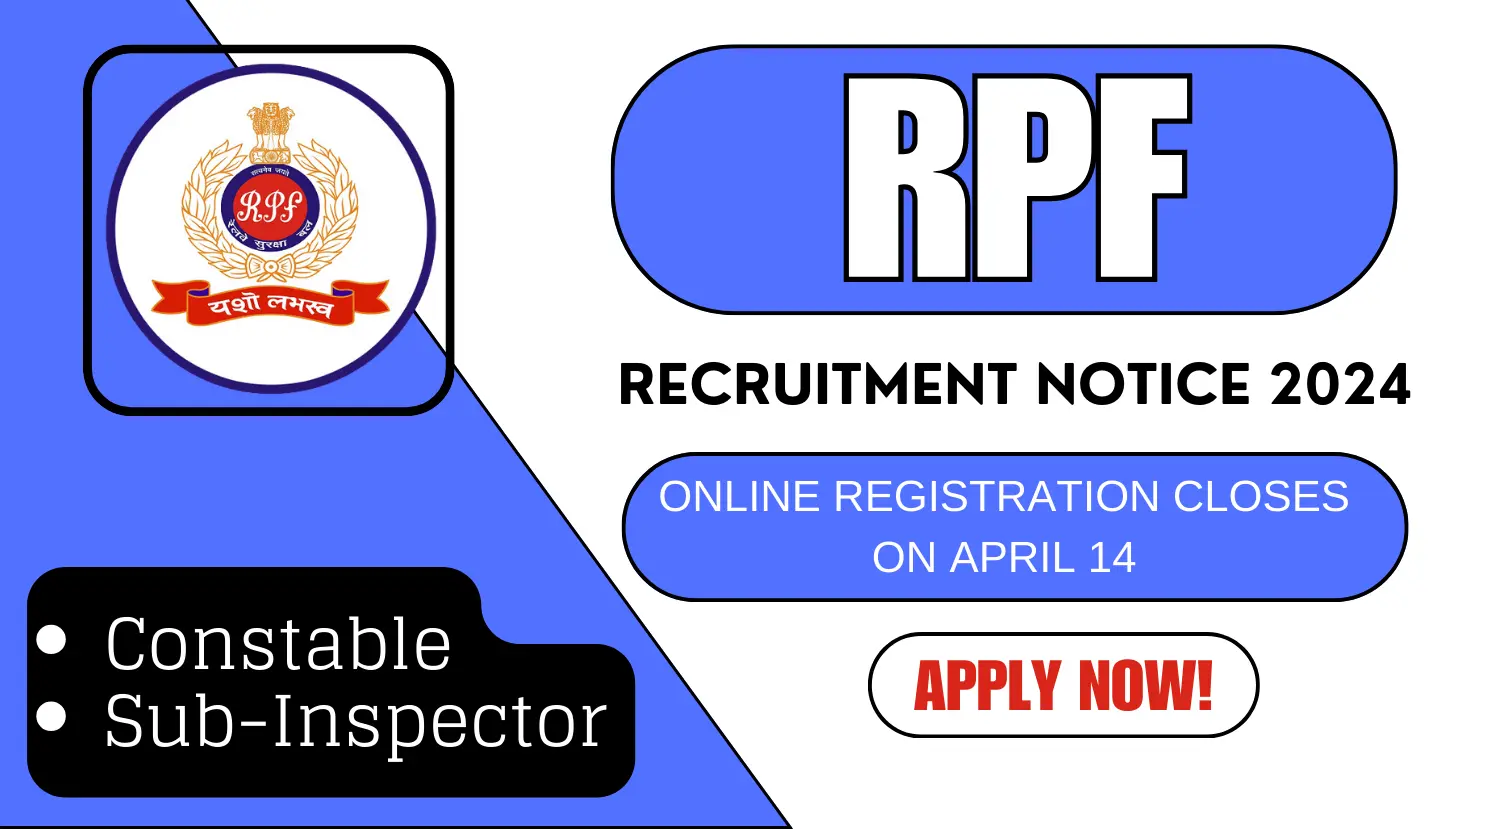 RPF Recruitment Online Registration Closes on April 14 Apply Now